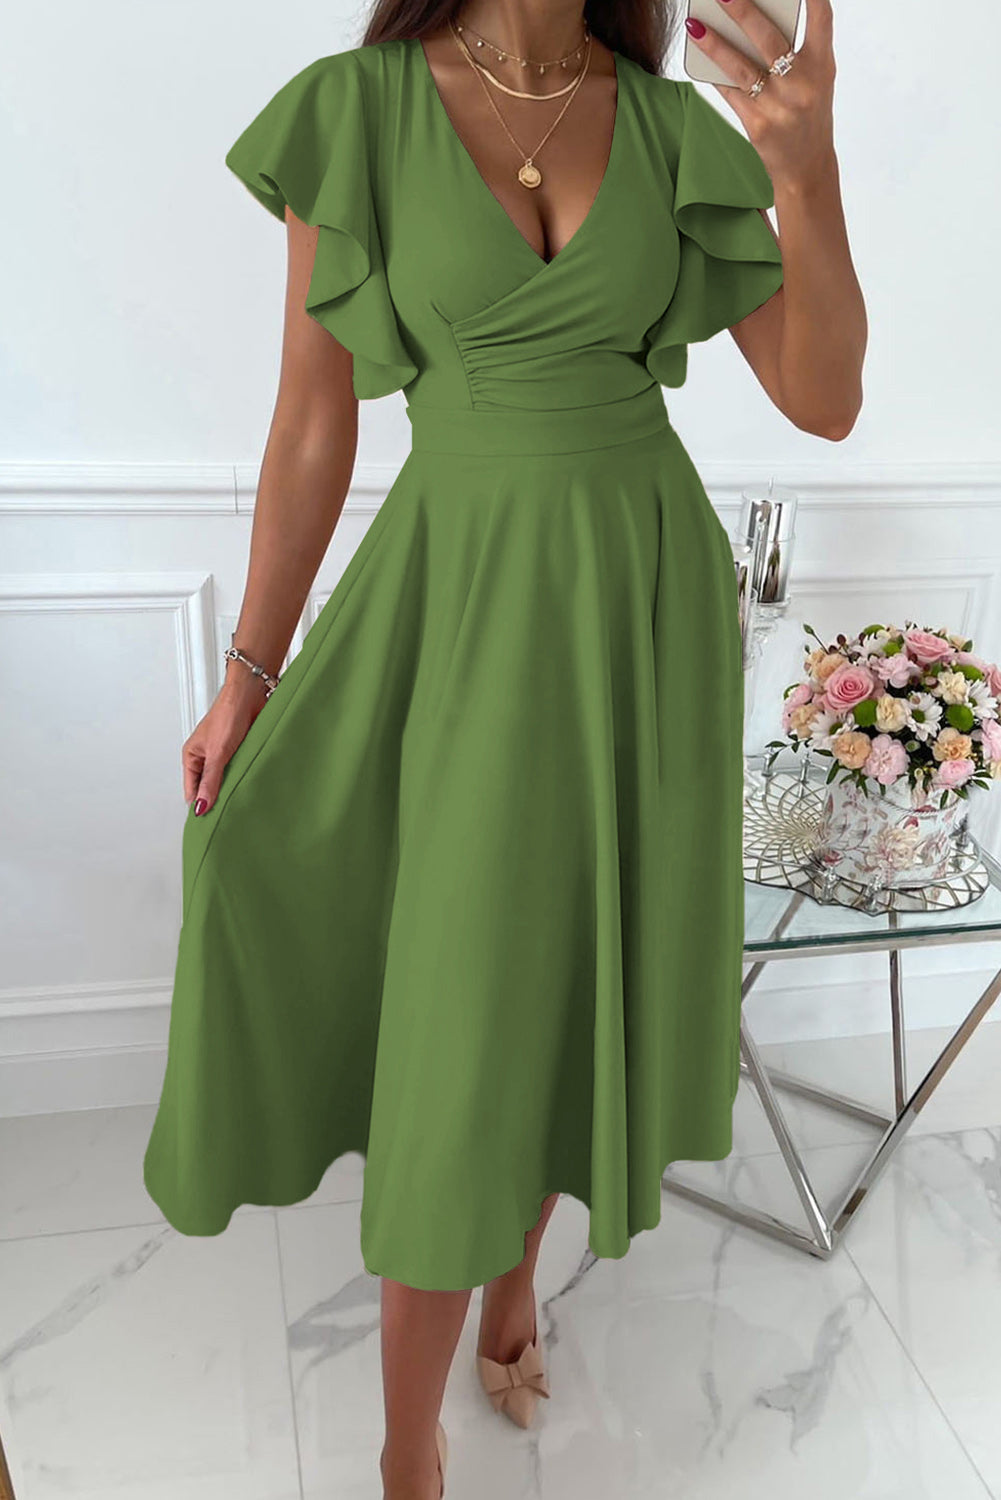 LC6110363-109-S, LC6110363-109-M, LC6110363-109-L, LC6110363-109-XL, LC6110363-109-2XL, Green Womens V Neck Ruffle Sleeve Wrap Dress Midi Dress Cocktail Party Dress